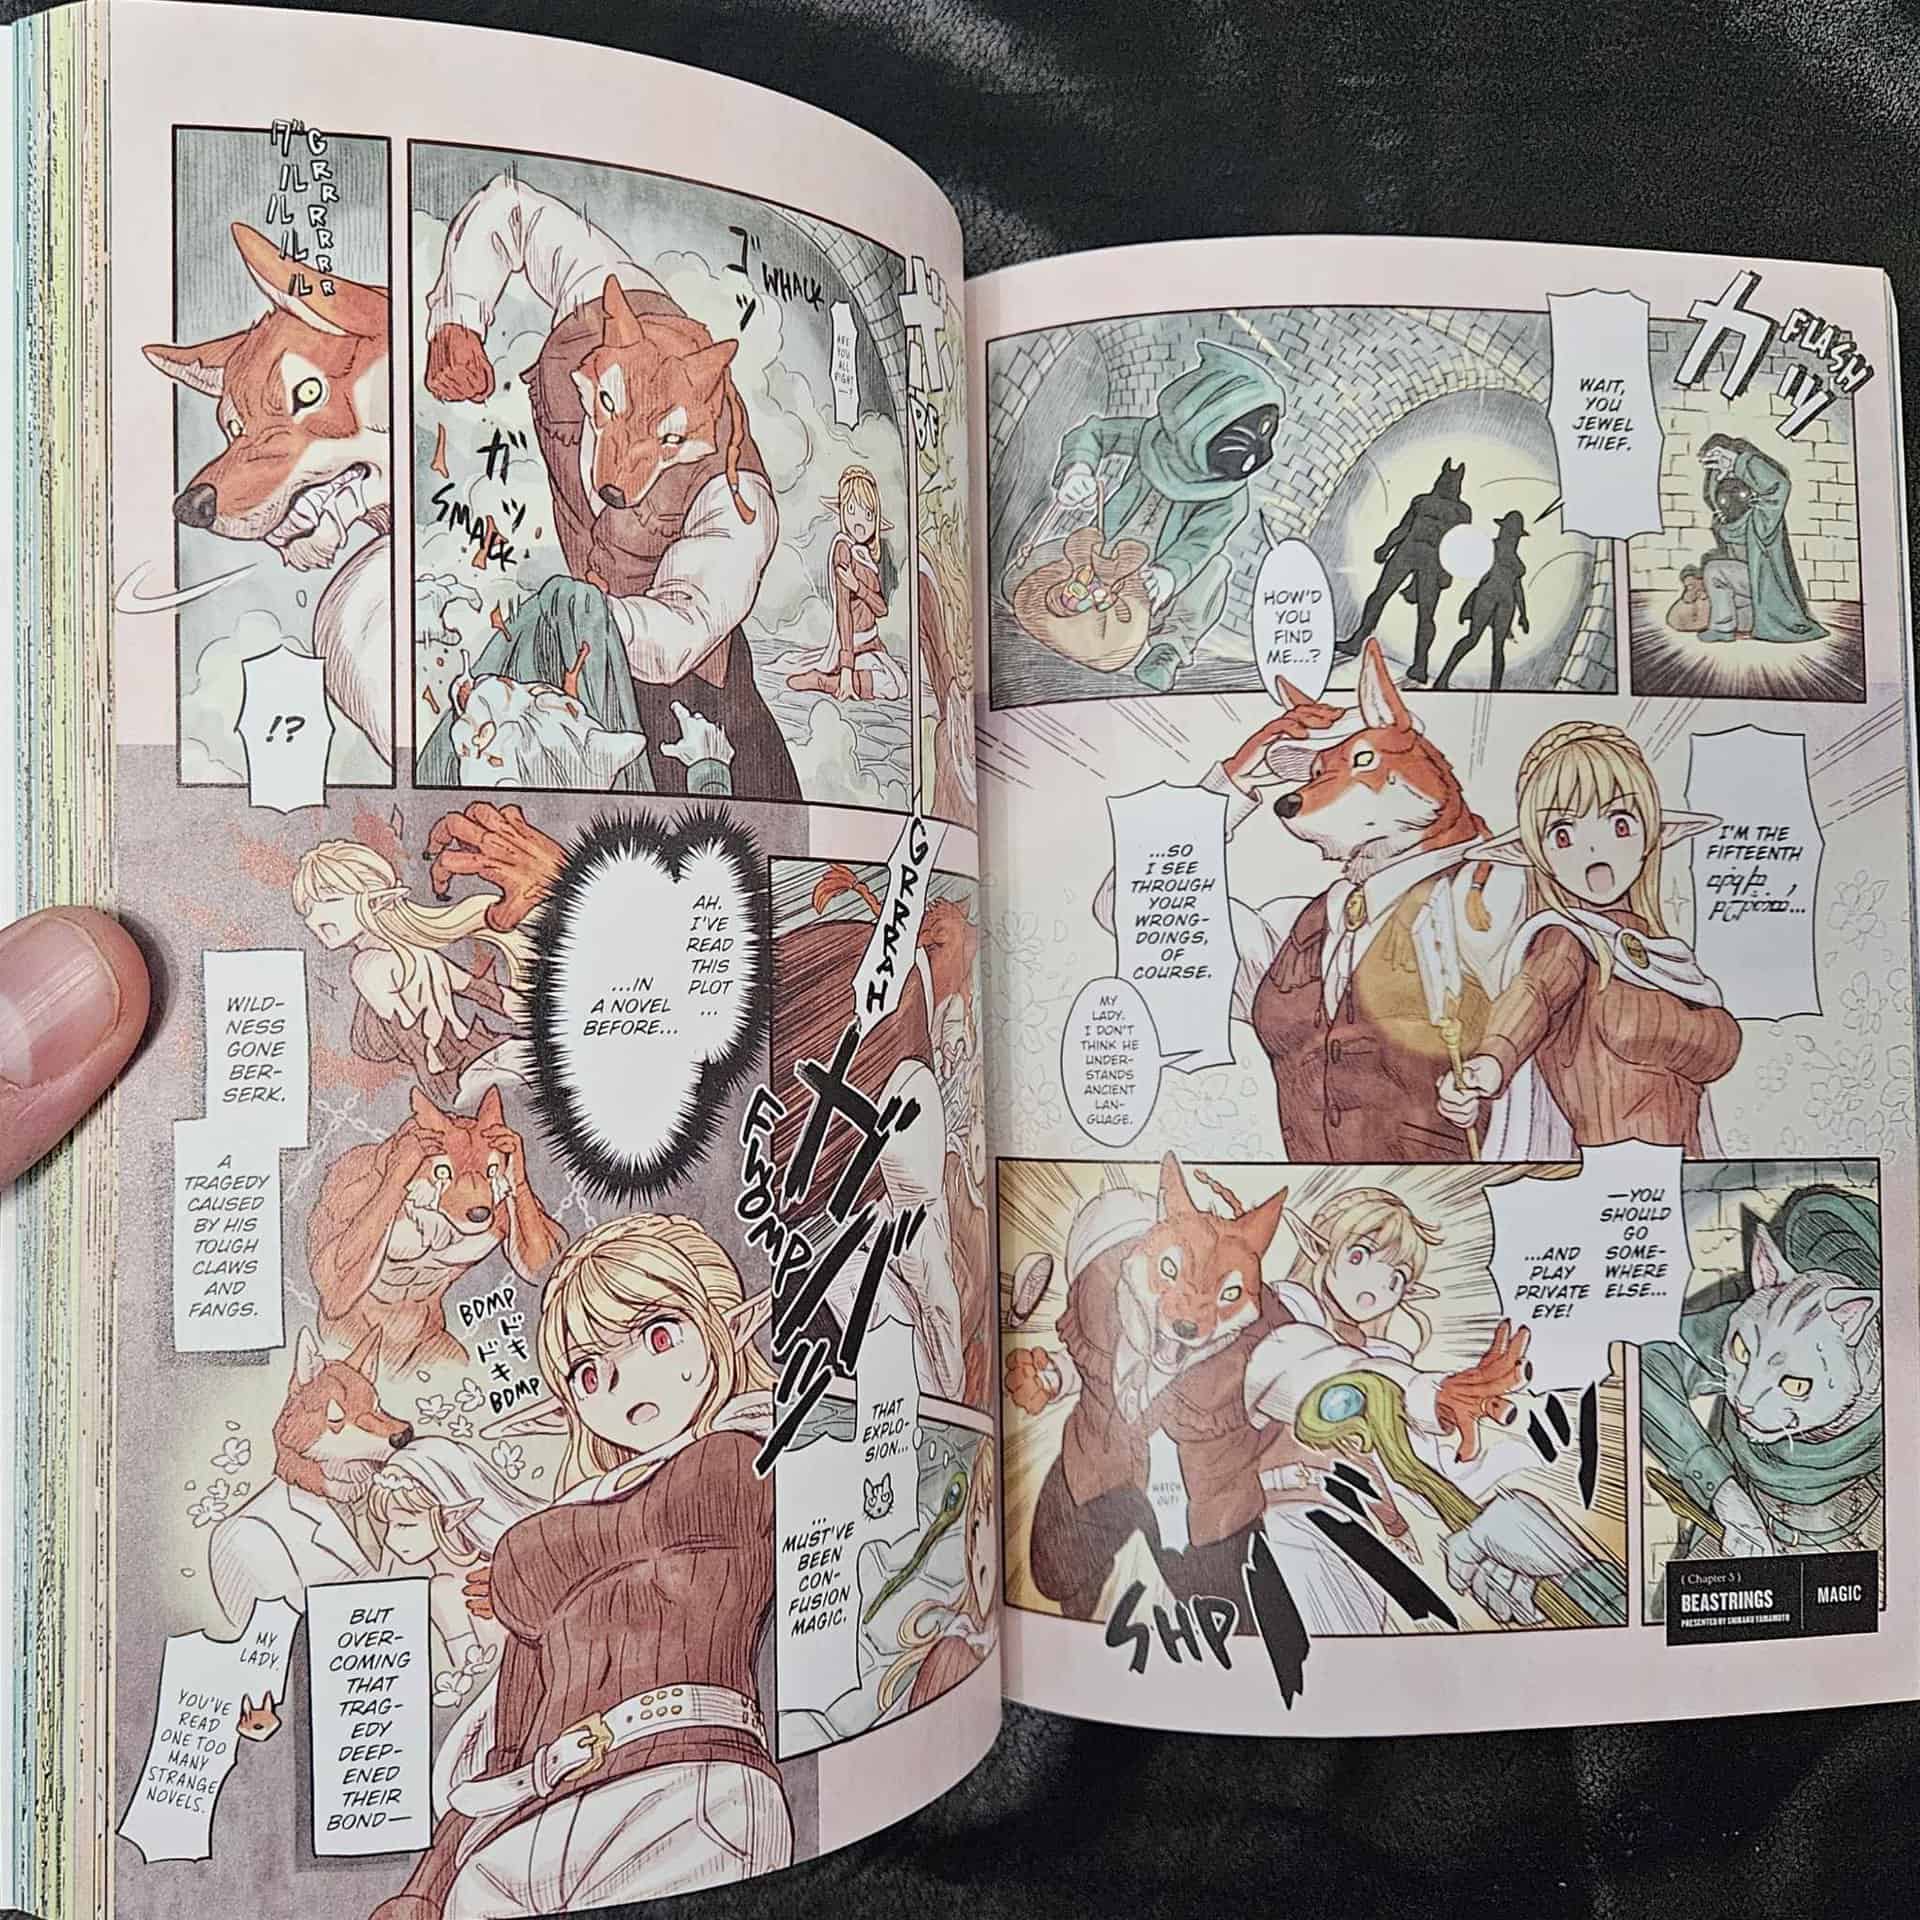 Interior Art from Beastrings Manga